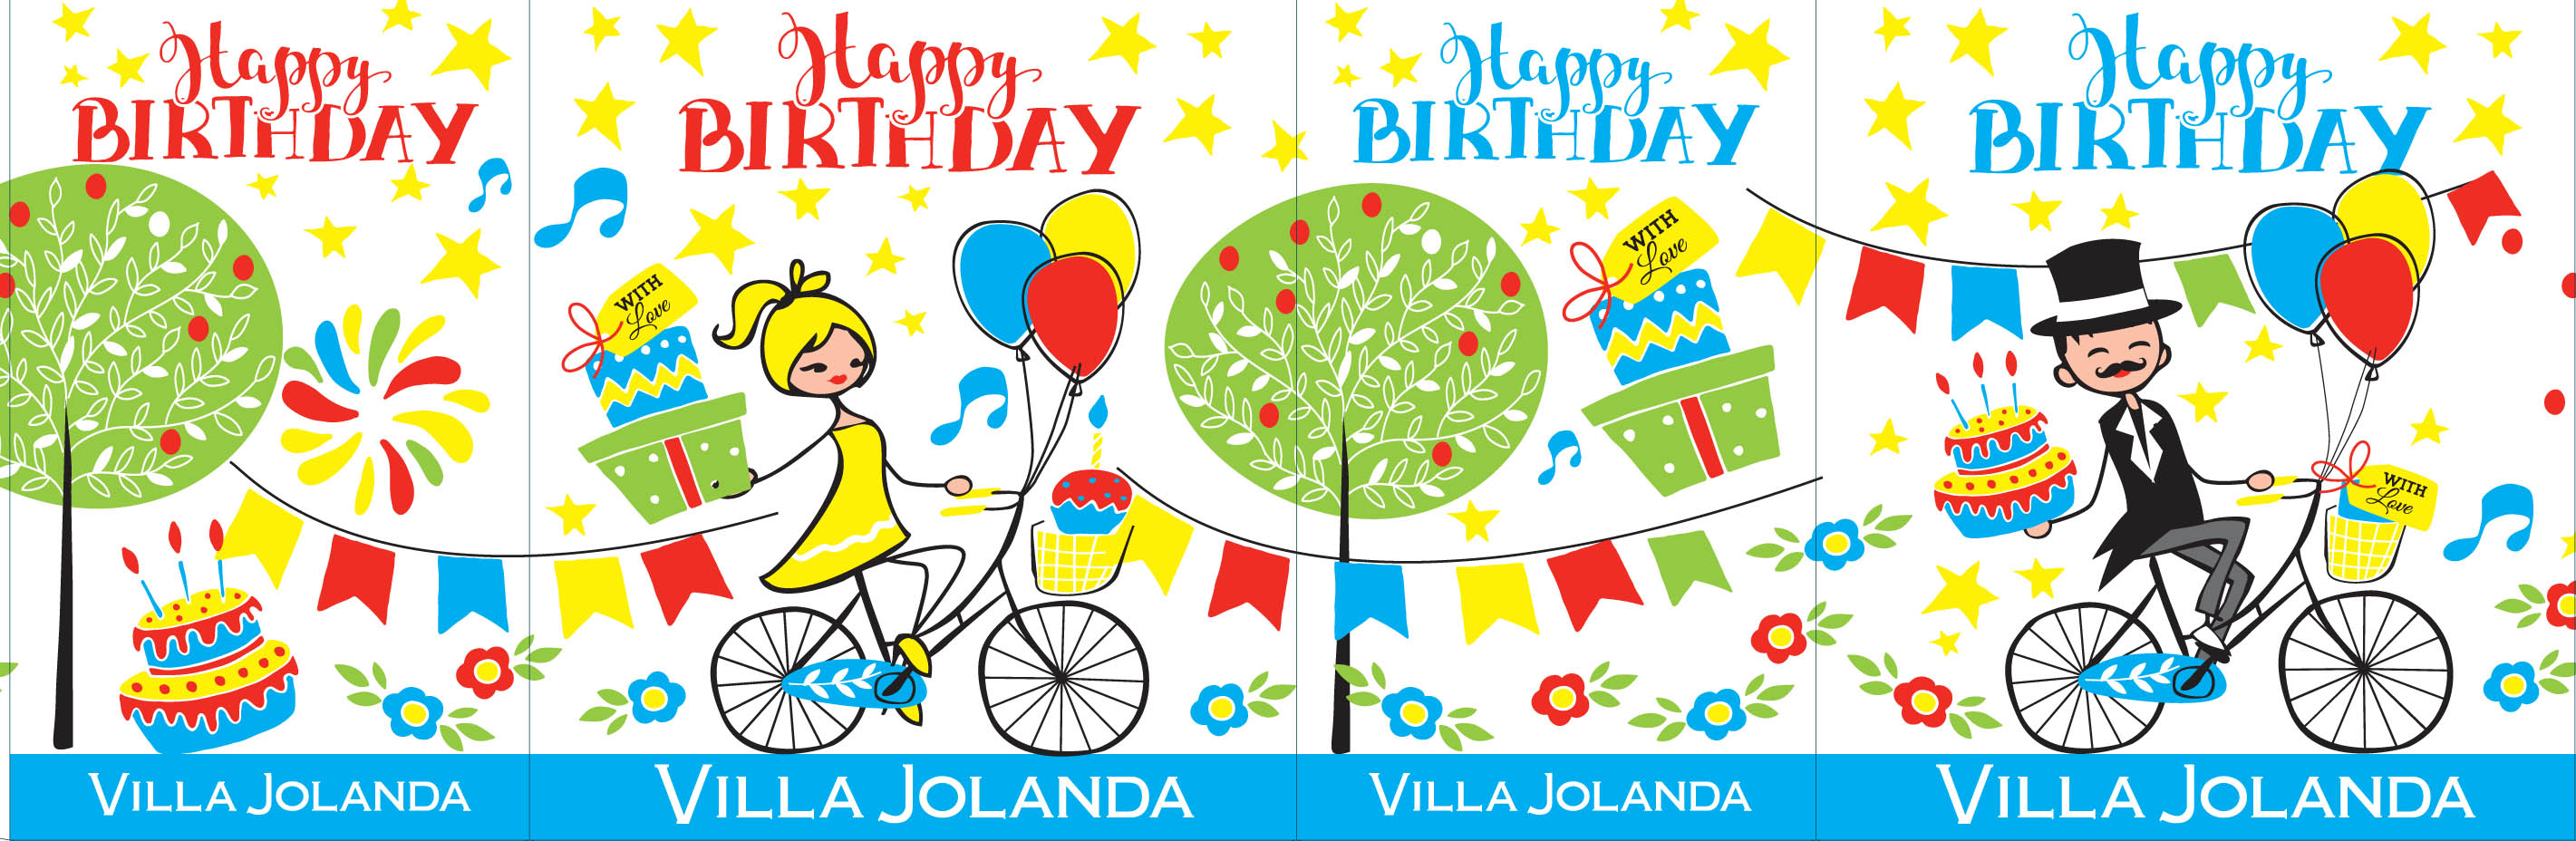 Villa Jolanda - Happy Birthday label